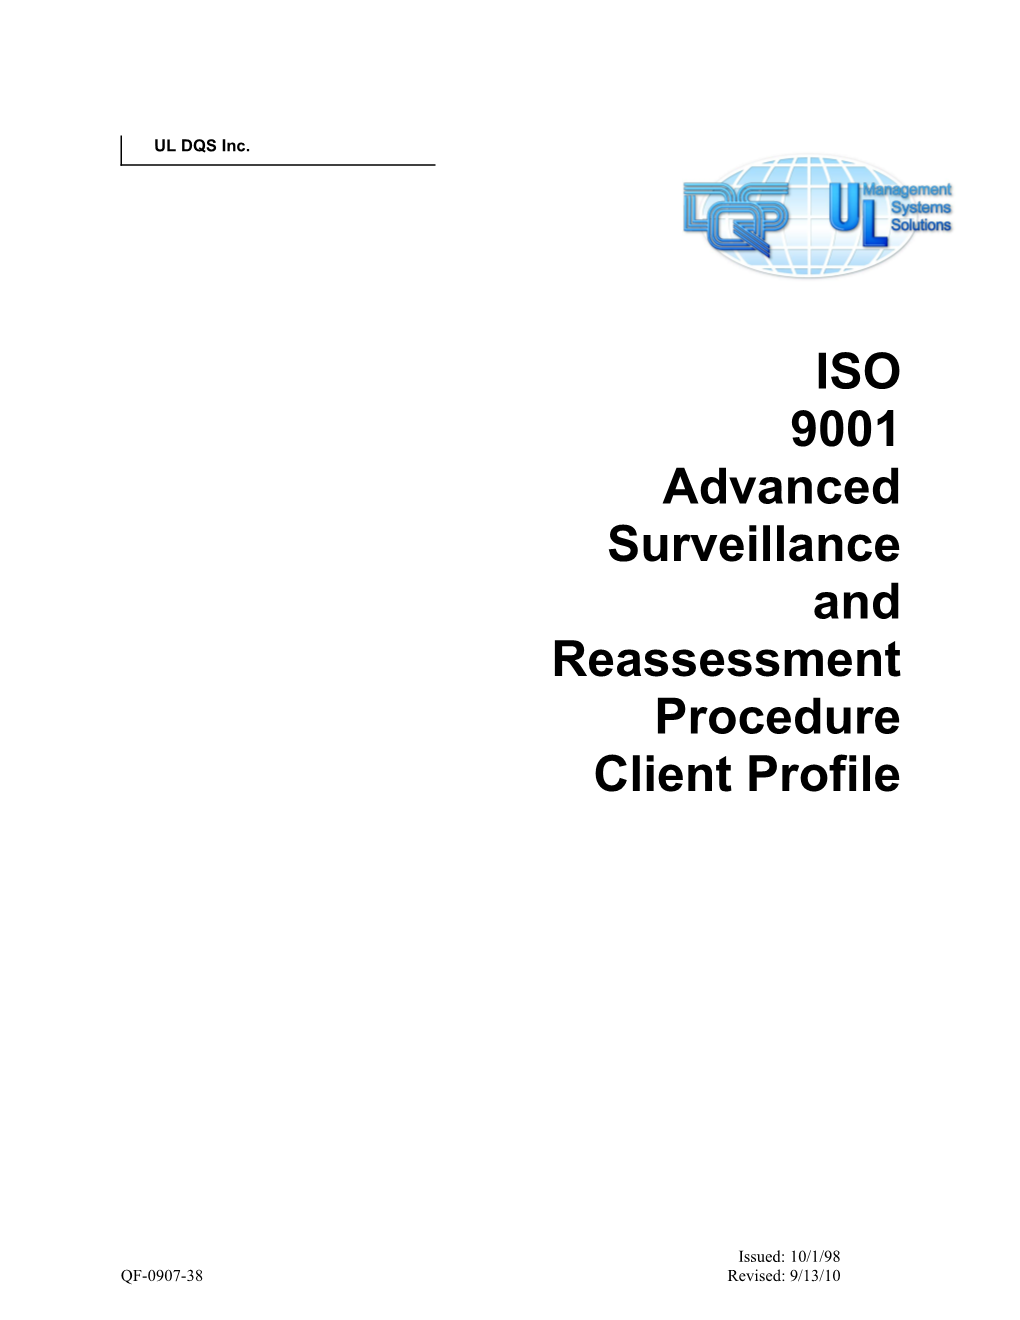 UL's ISO 14000 Registration Program Preliminary Information Form (RP-1-E)